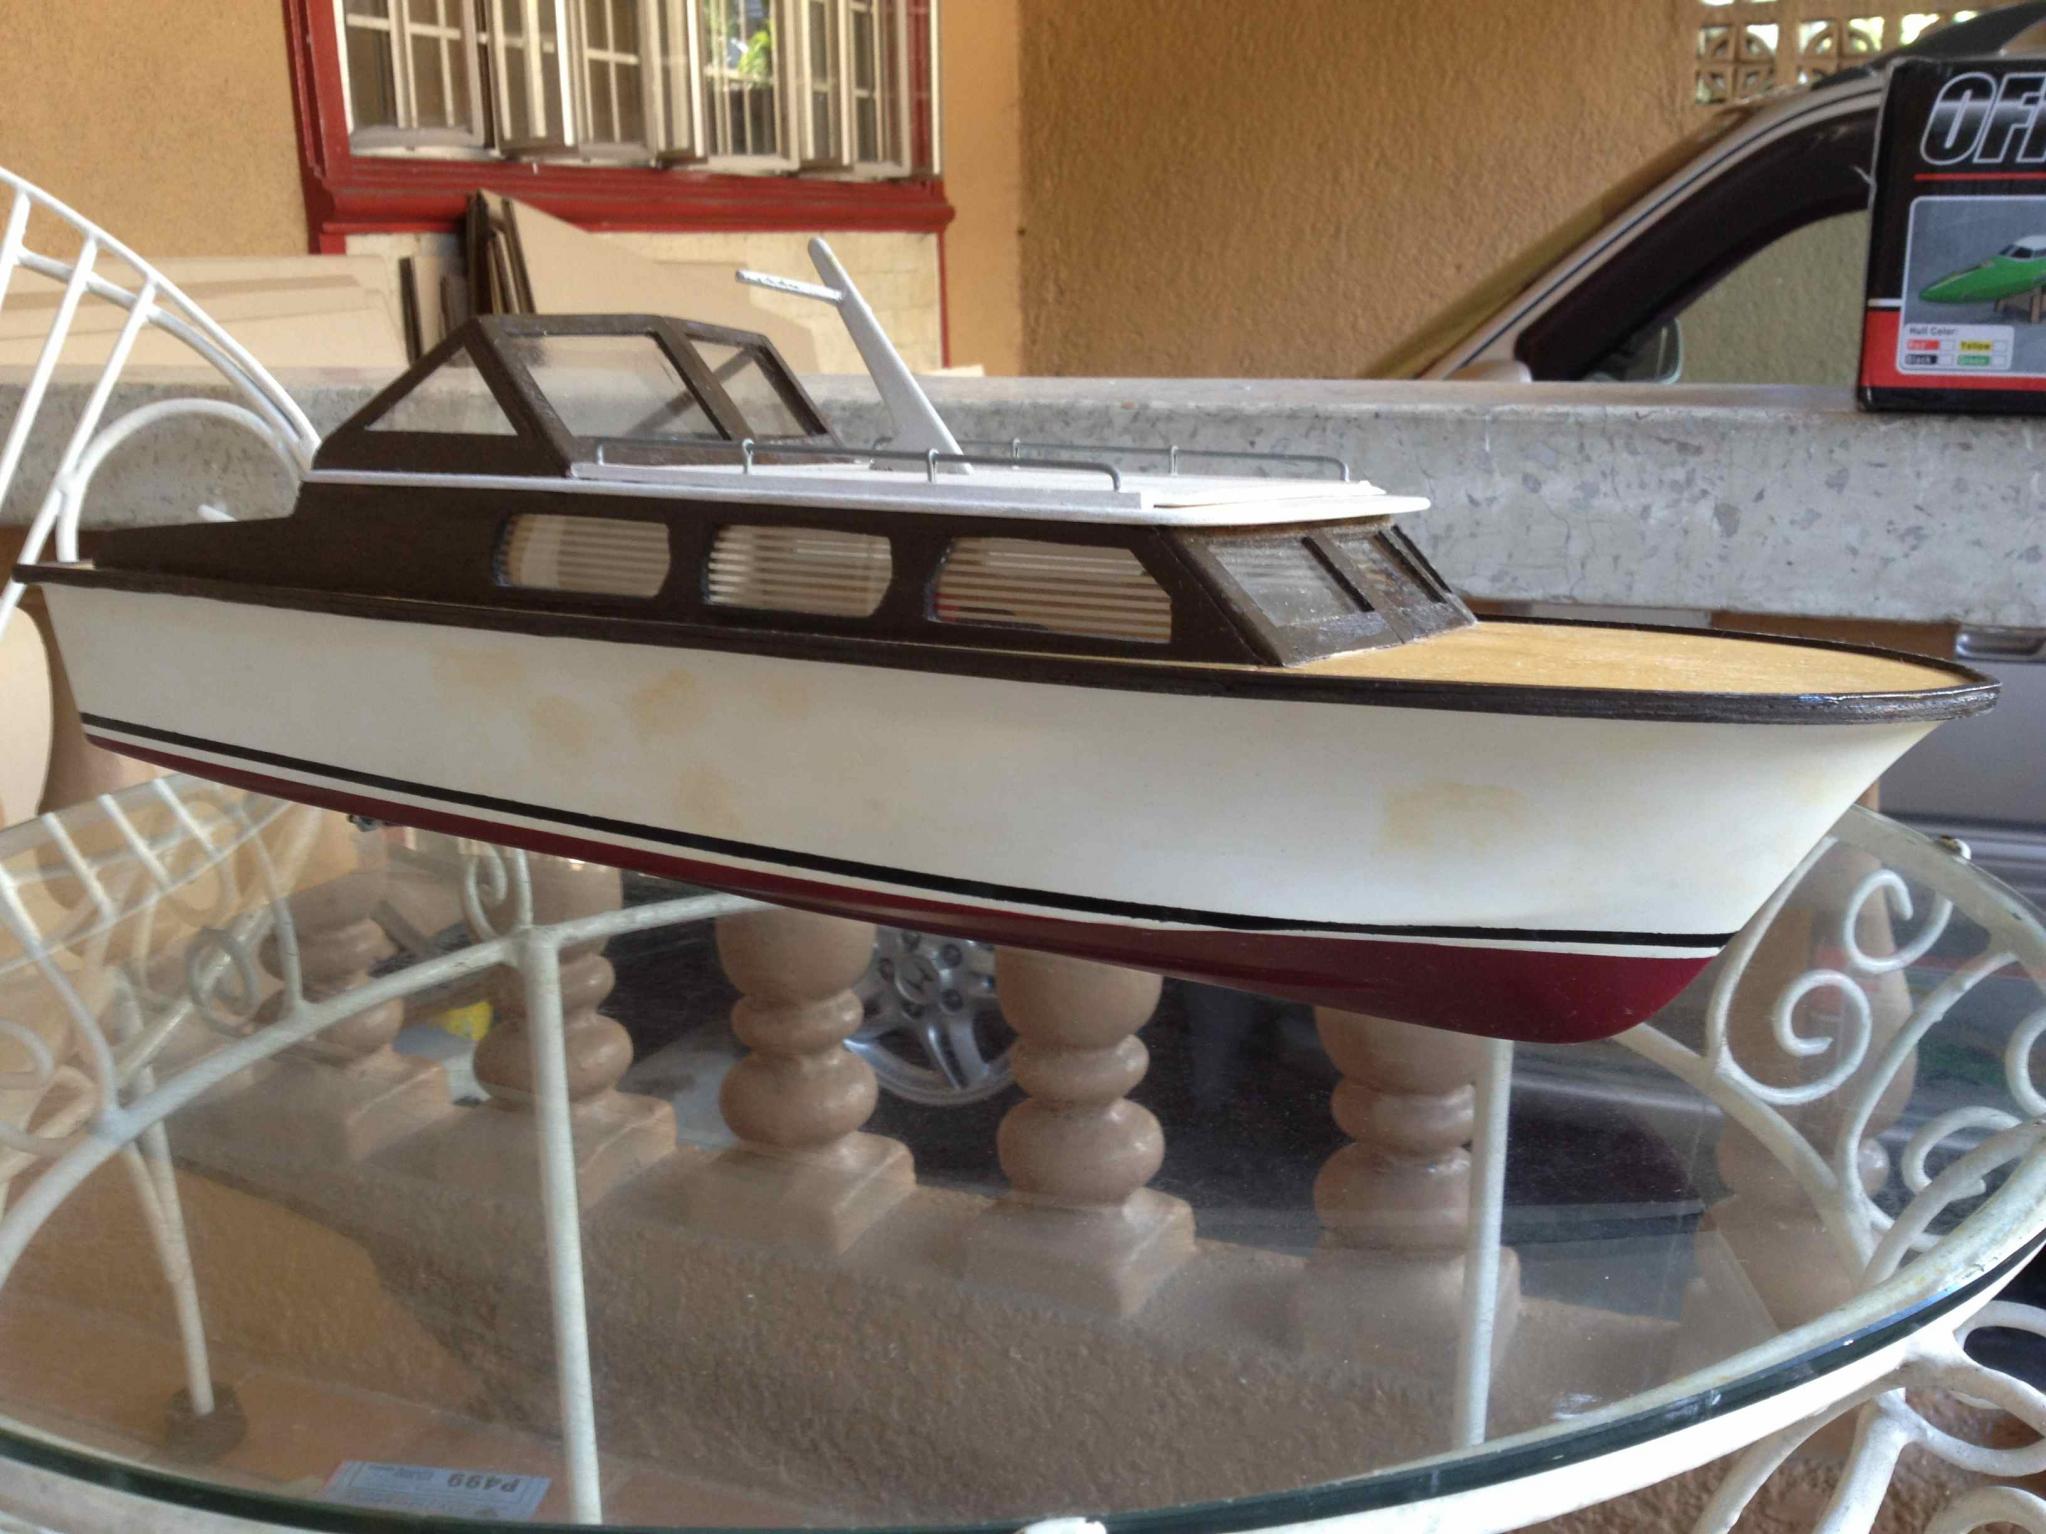 ... mold.com/blog/fiberglass-mold-making-manuals-for-custom-car-boat-plane